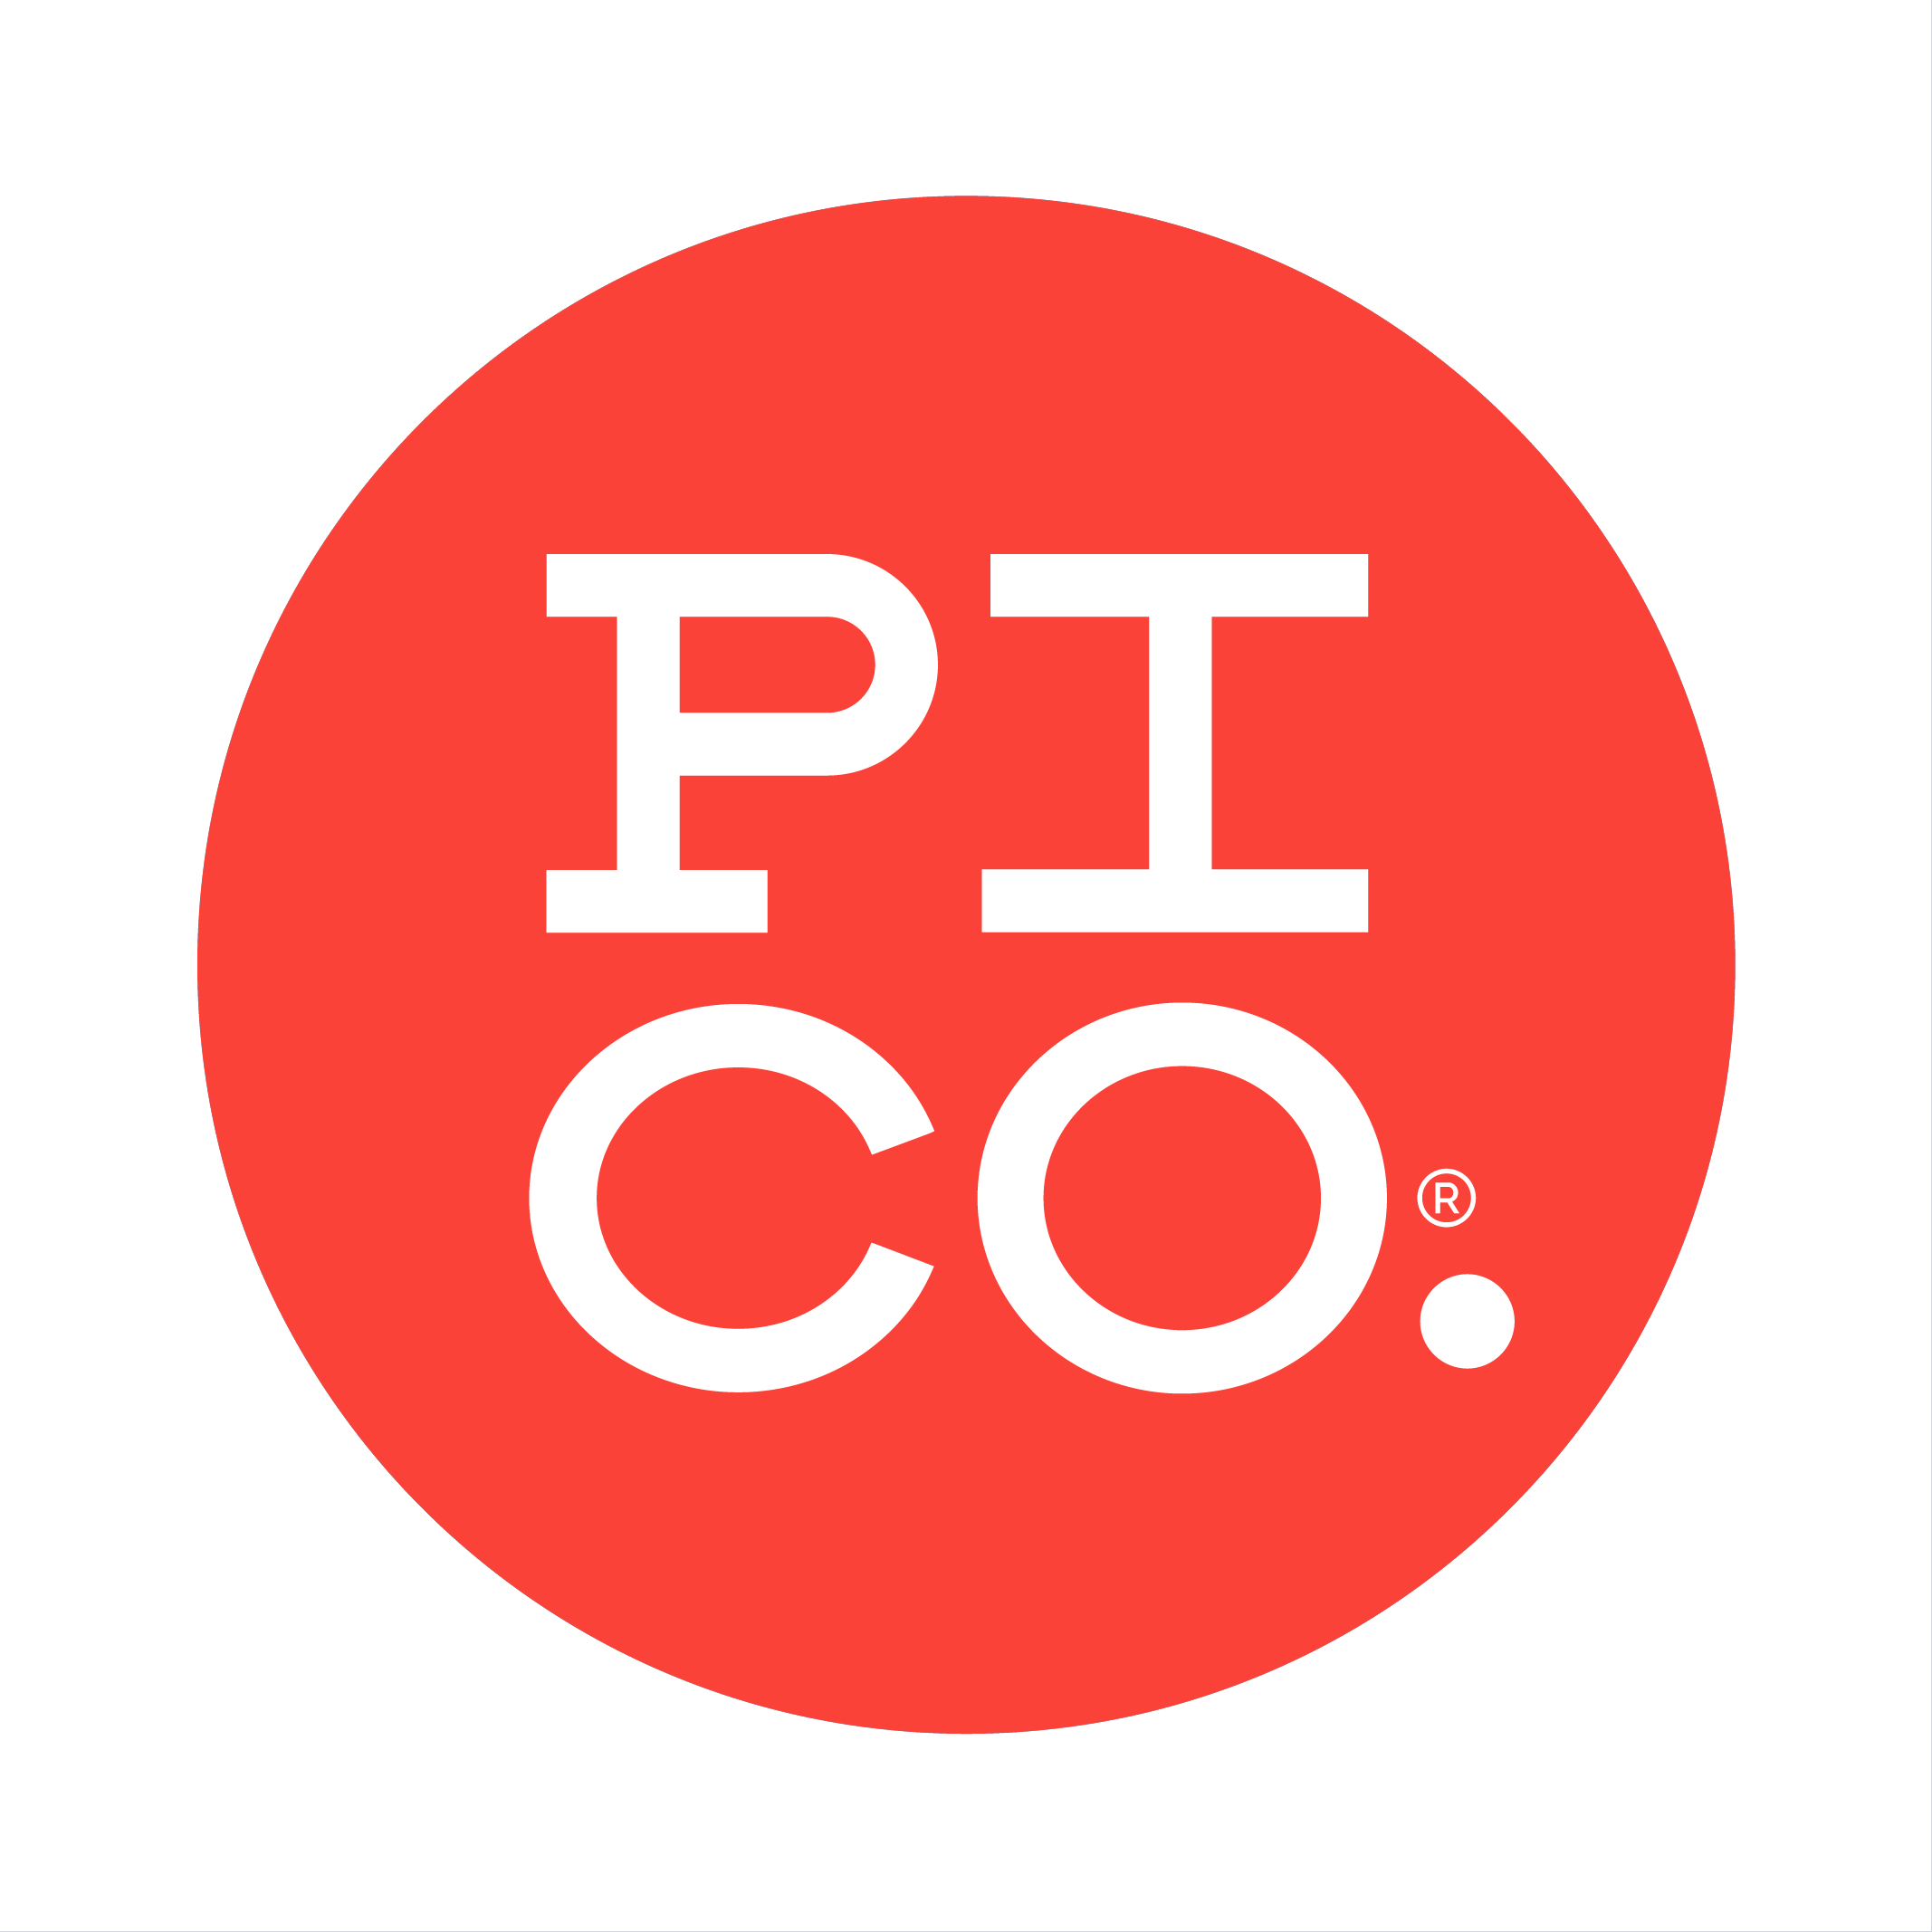 Pi Co. Pizza logo